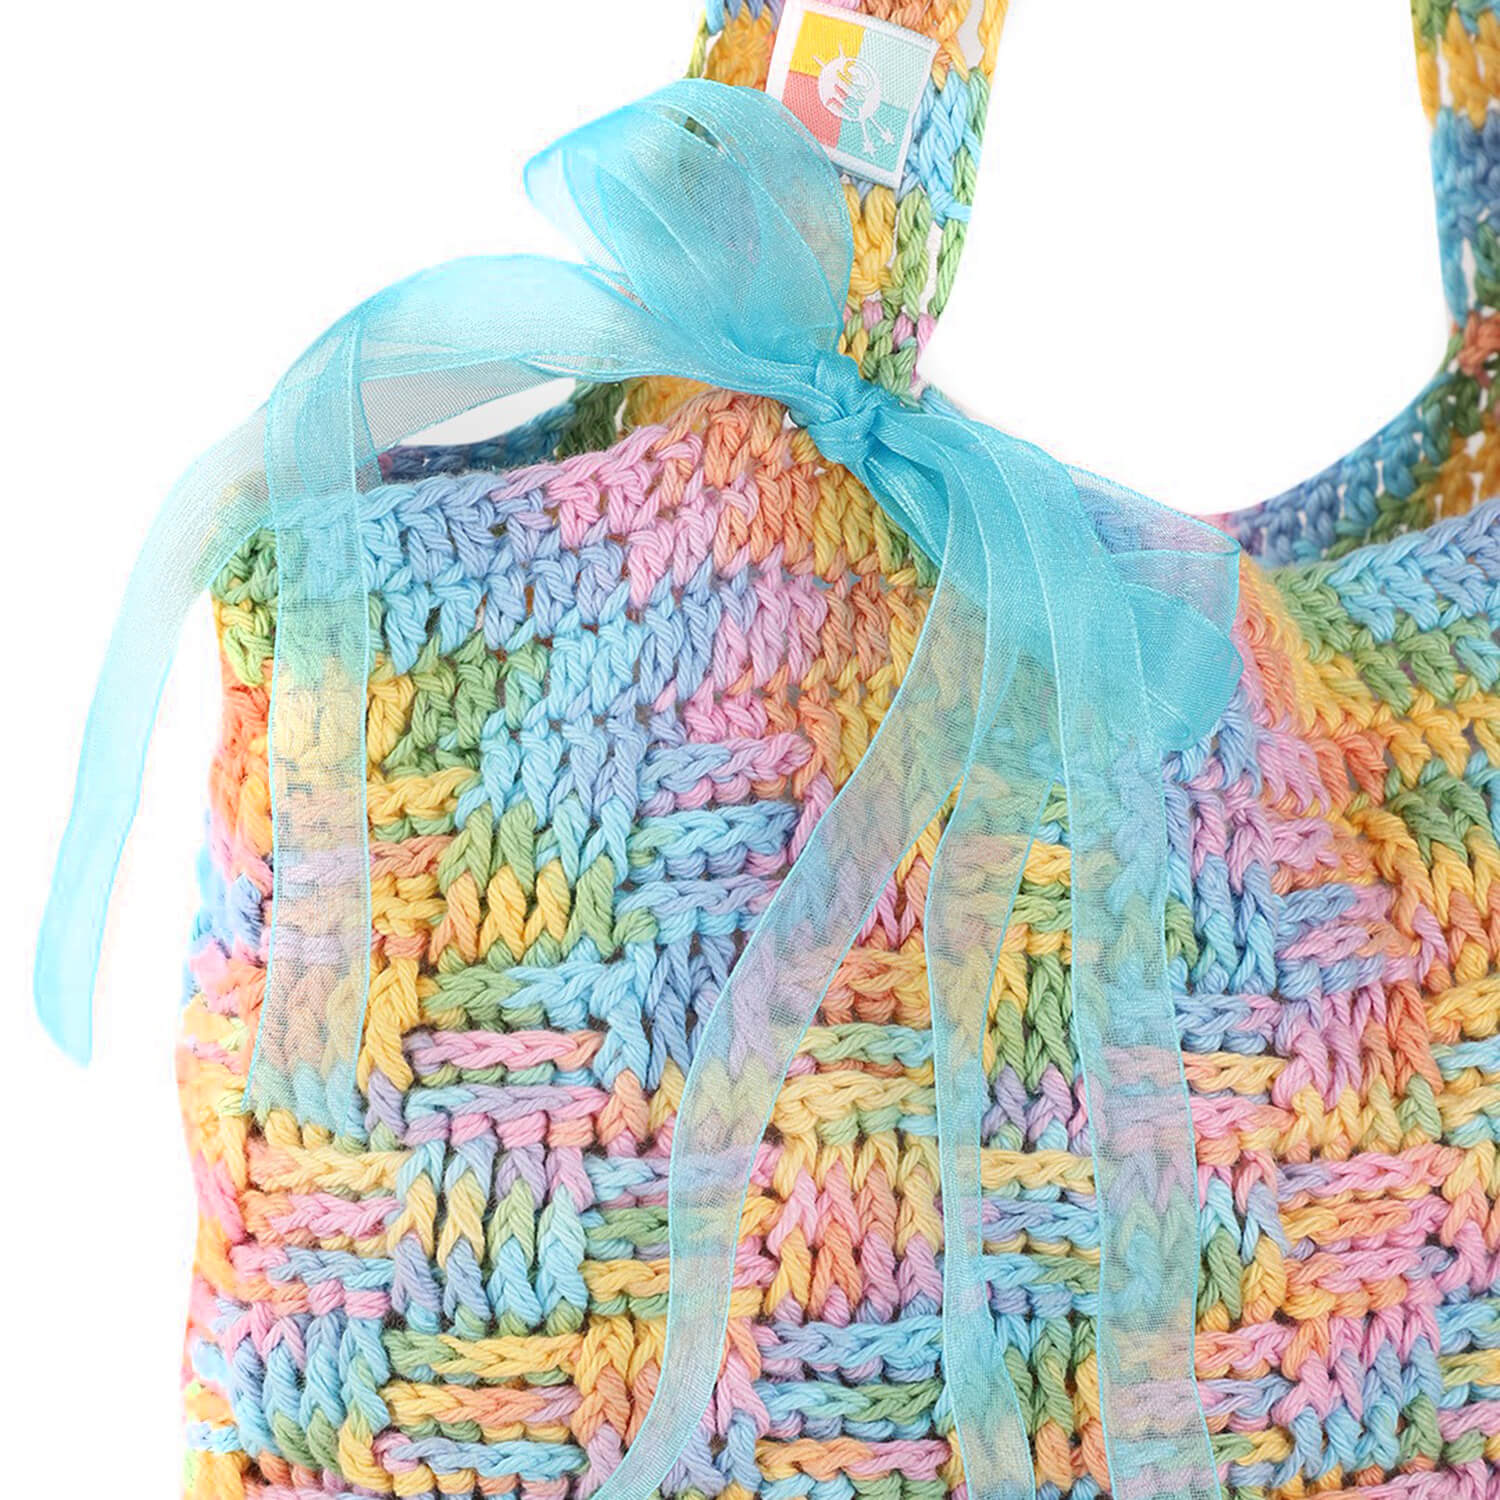 Handmade Crochet Market Bag - Multi-Color 2806